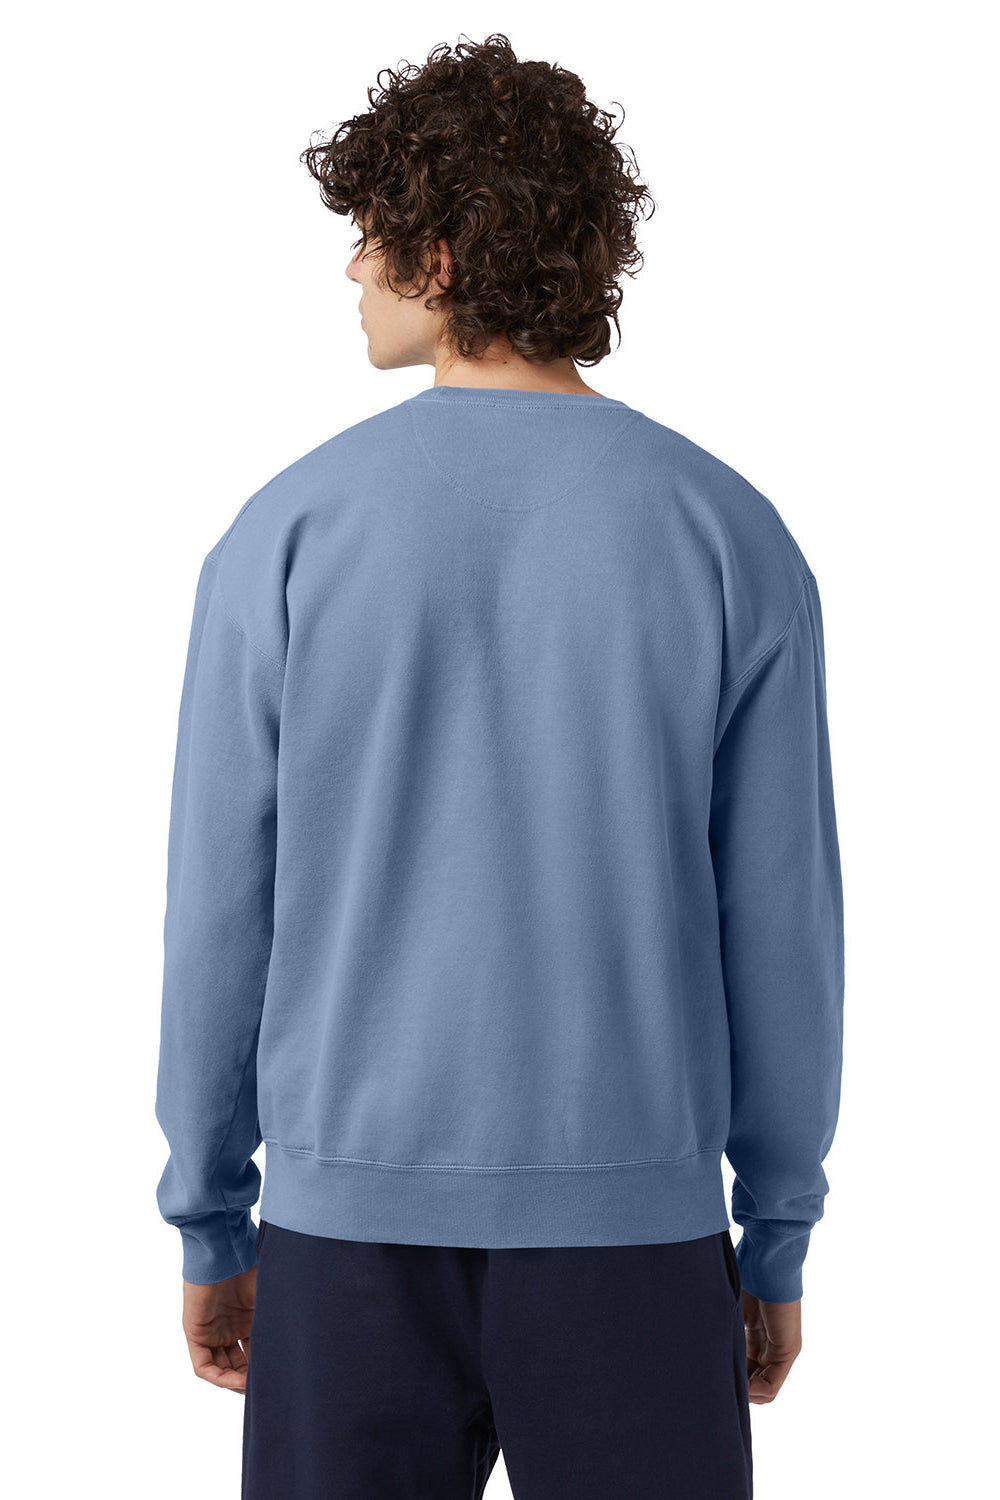 Champion CD400 Mens Garment Dyed Crewneck Sweatshirt Saltwater Blue Model Back